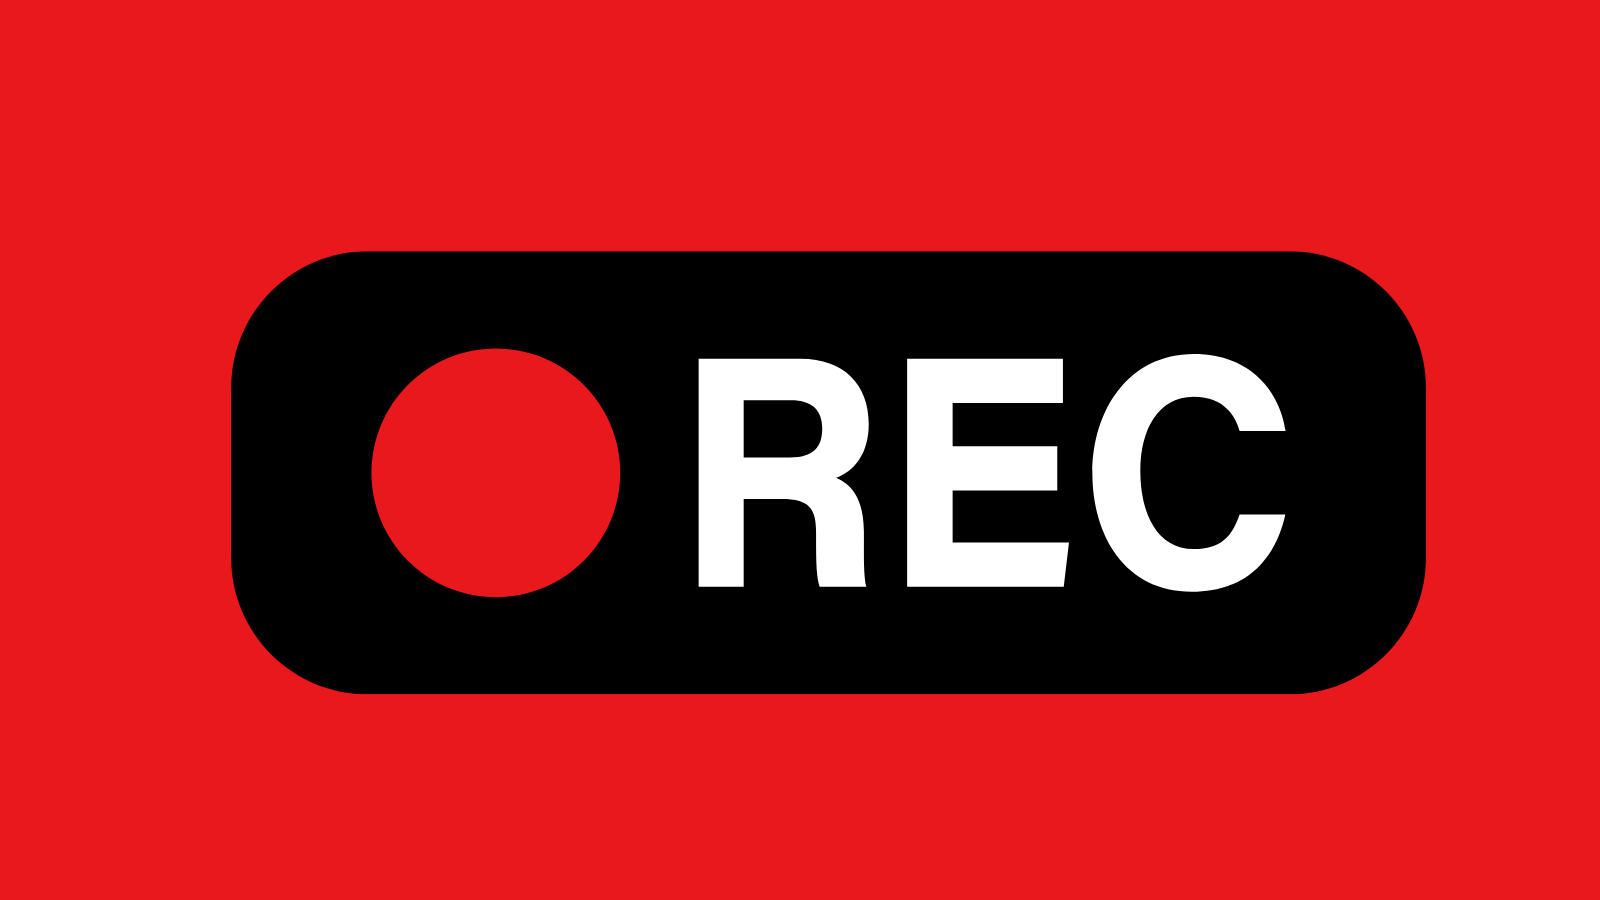 A record button